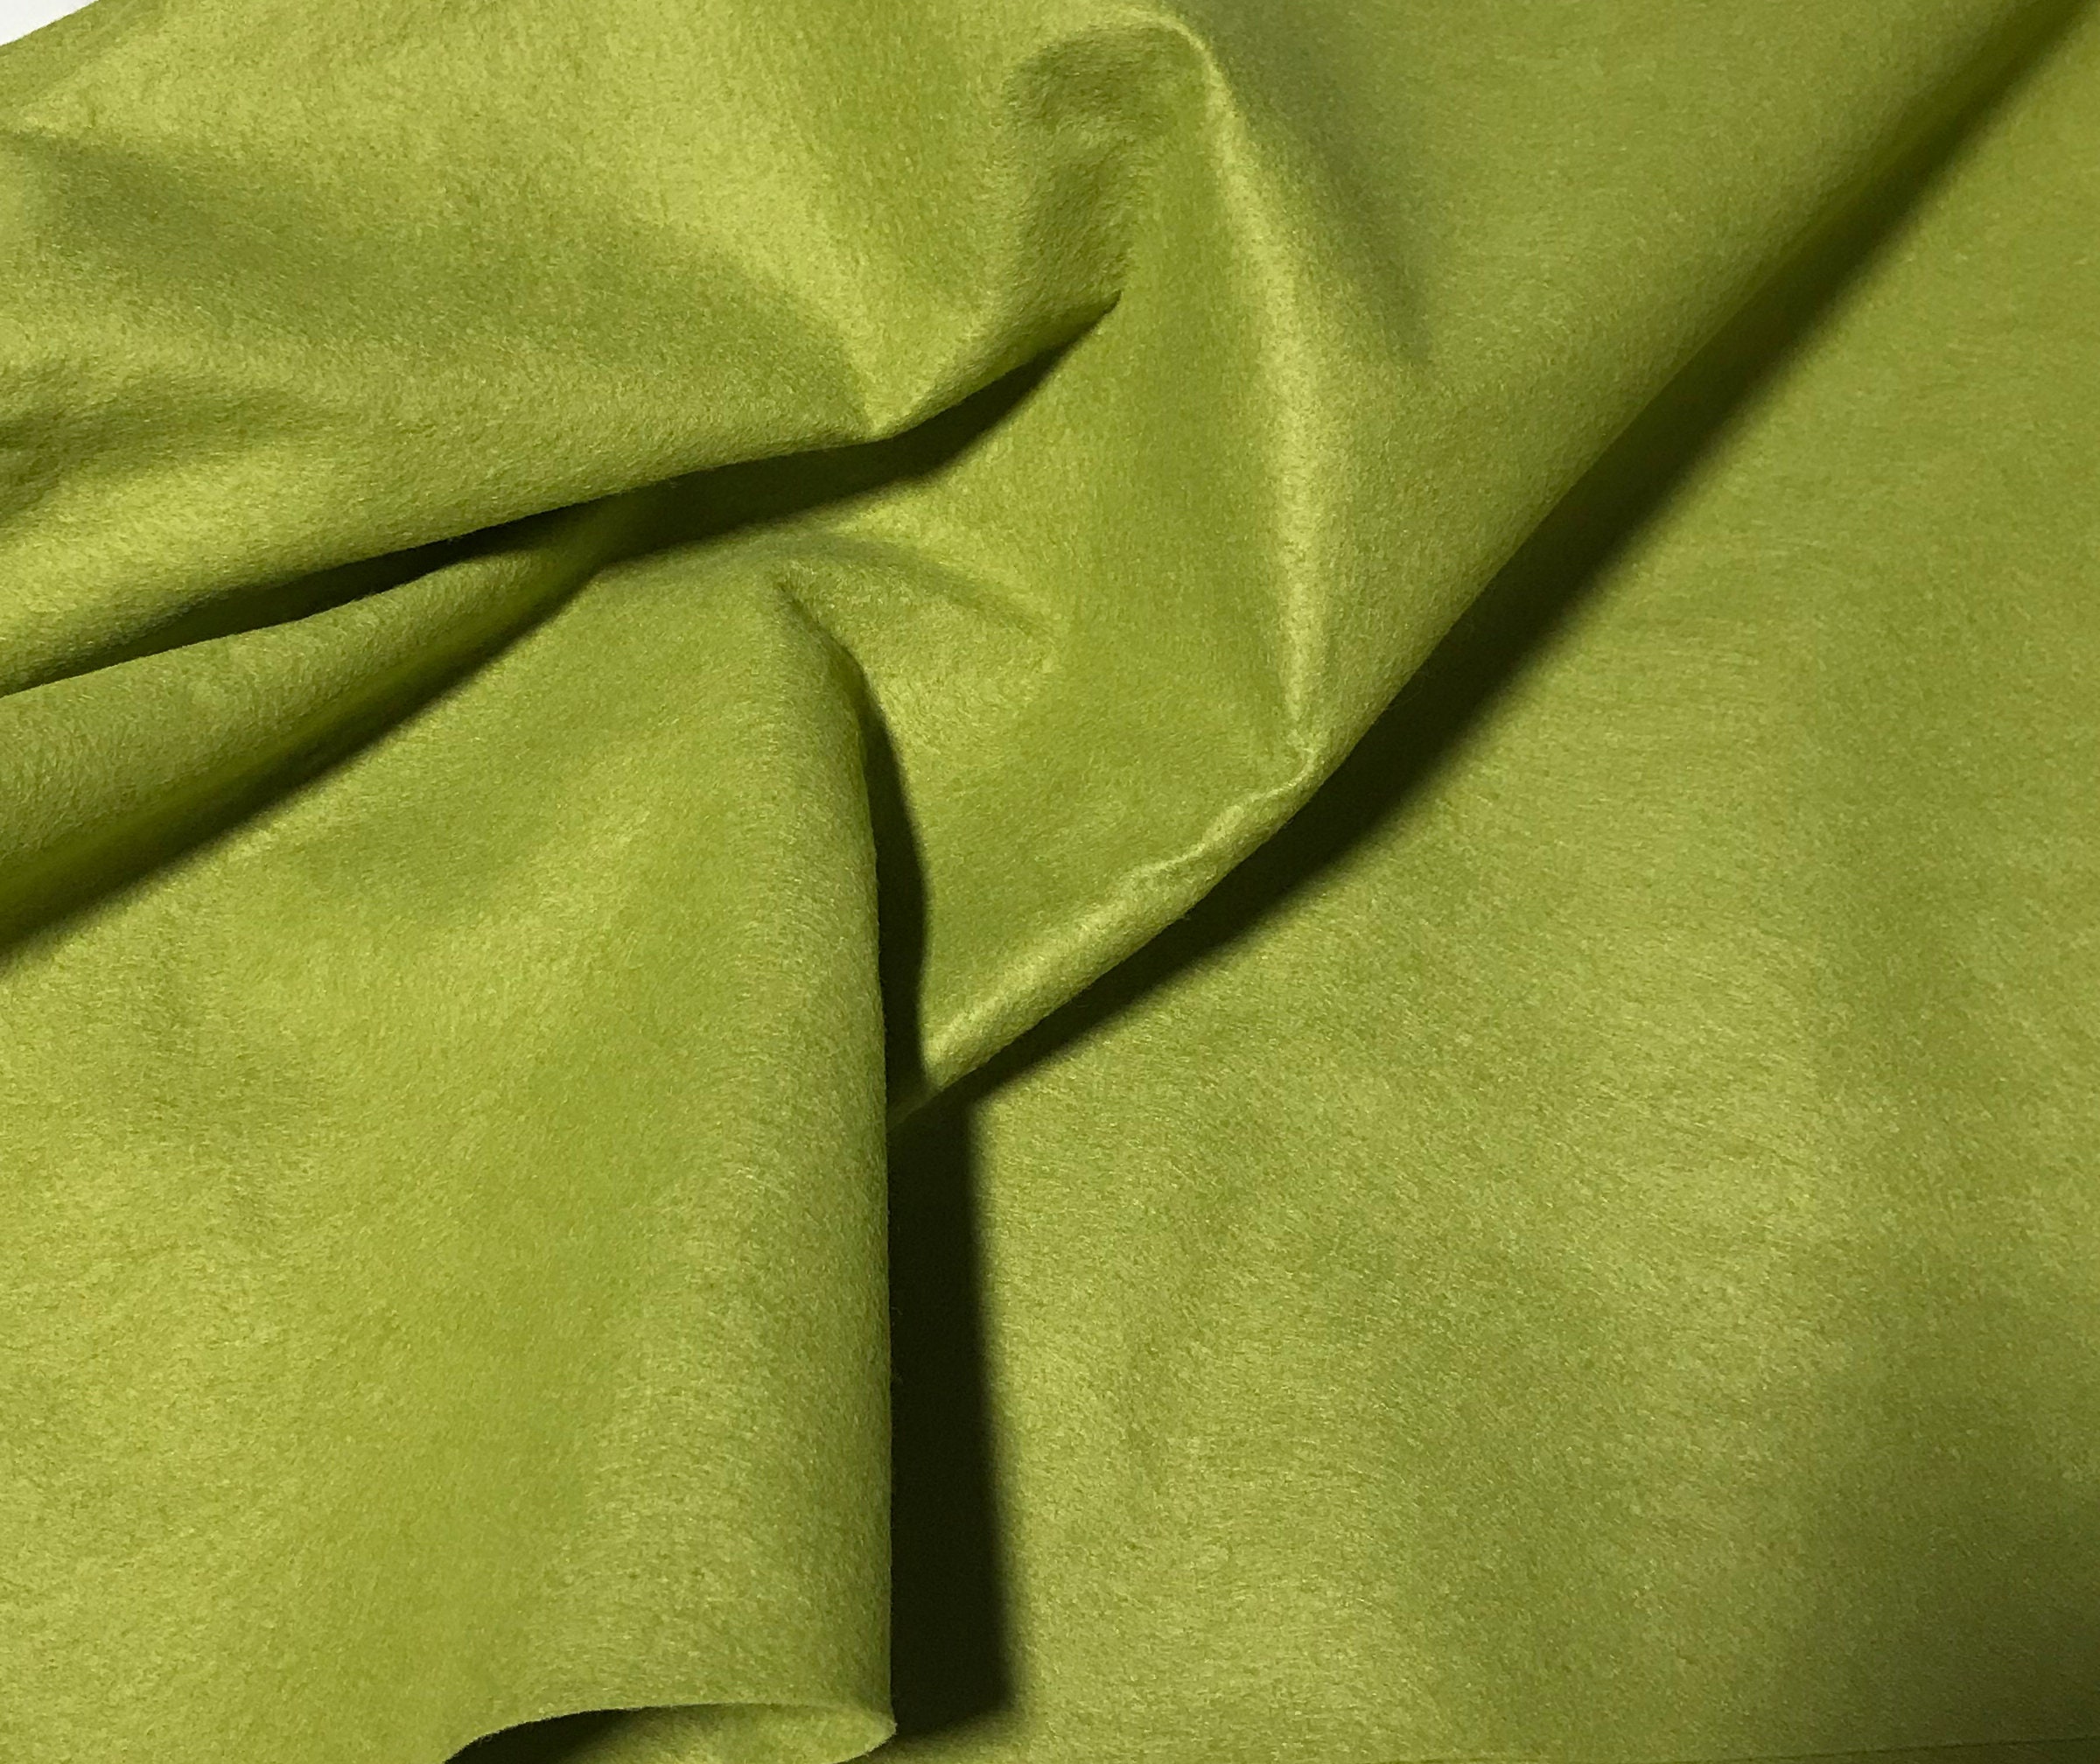 Pea Soup Green - Wool /Rayon Blend Felt Fabric